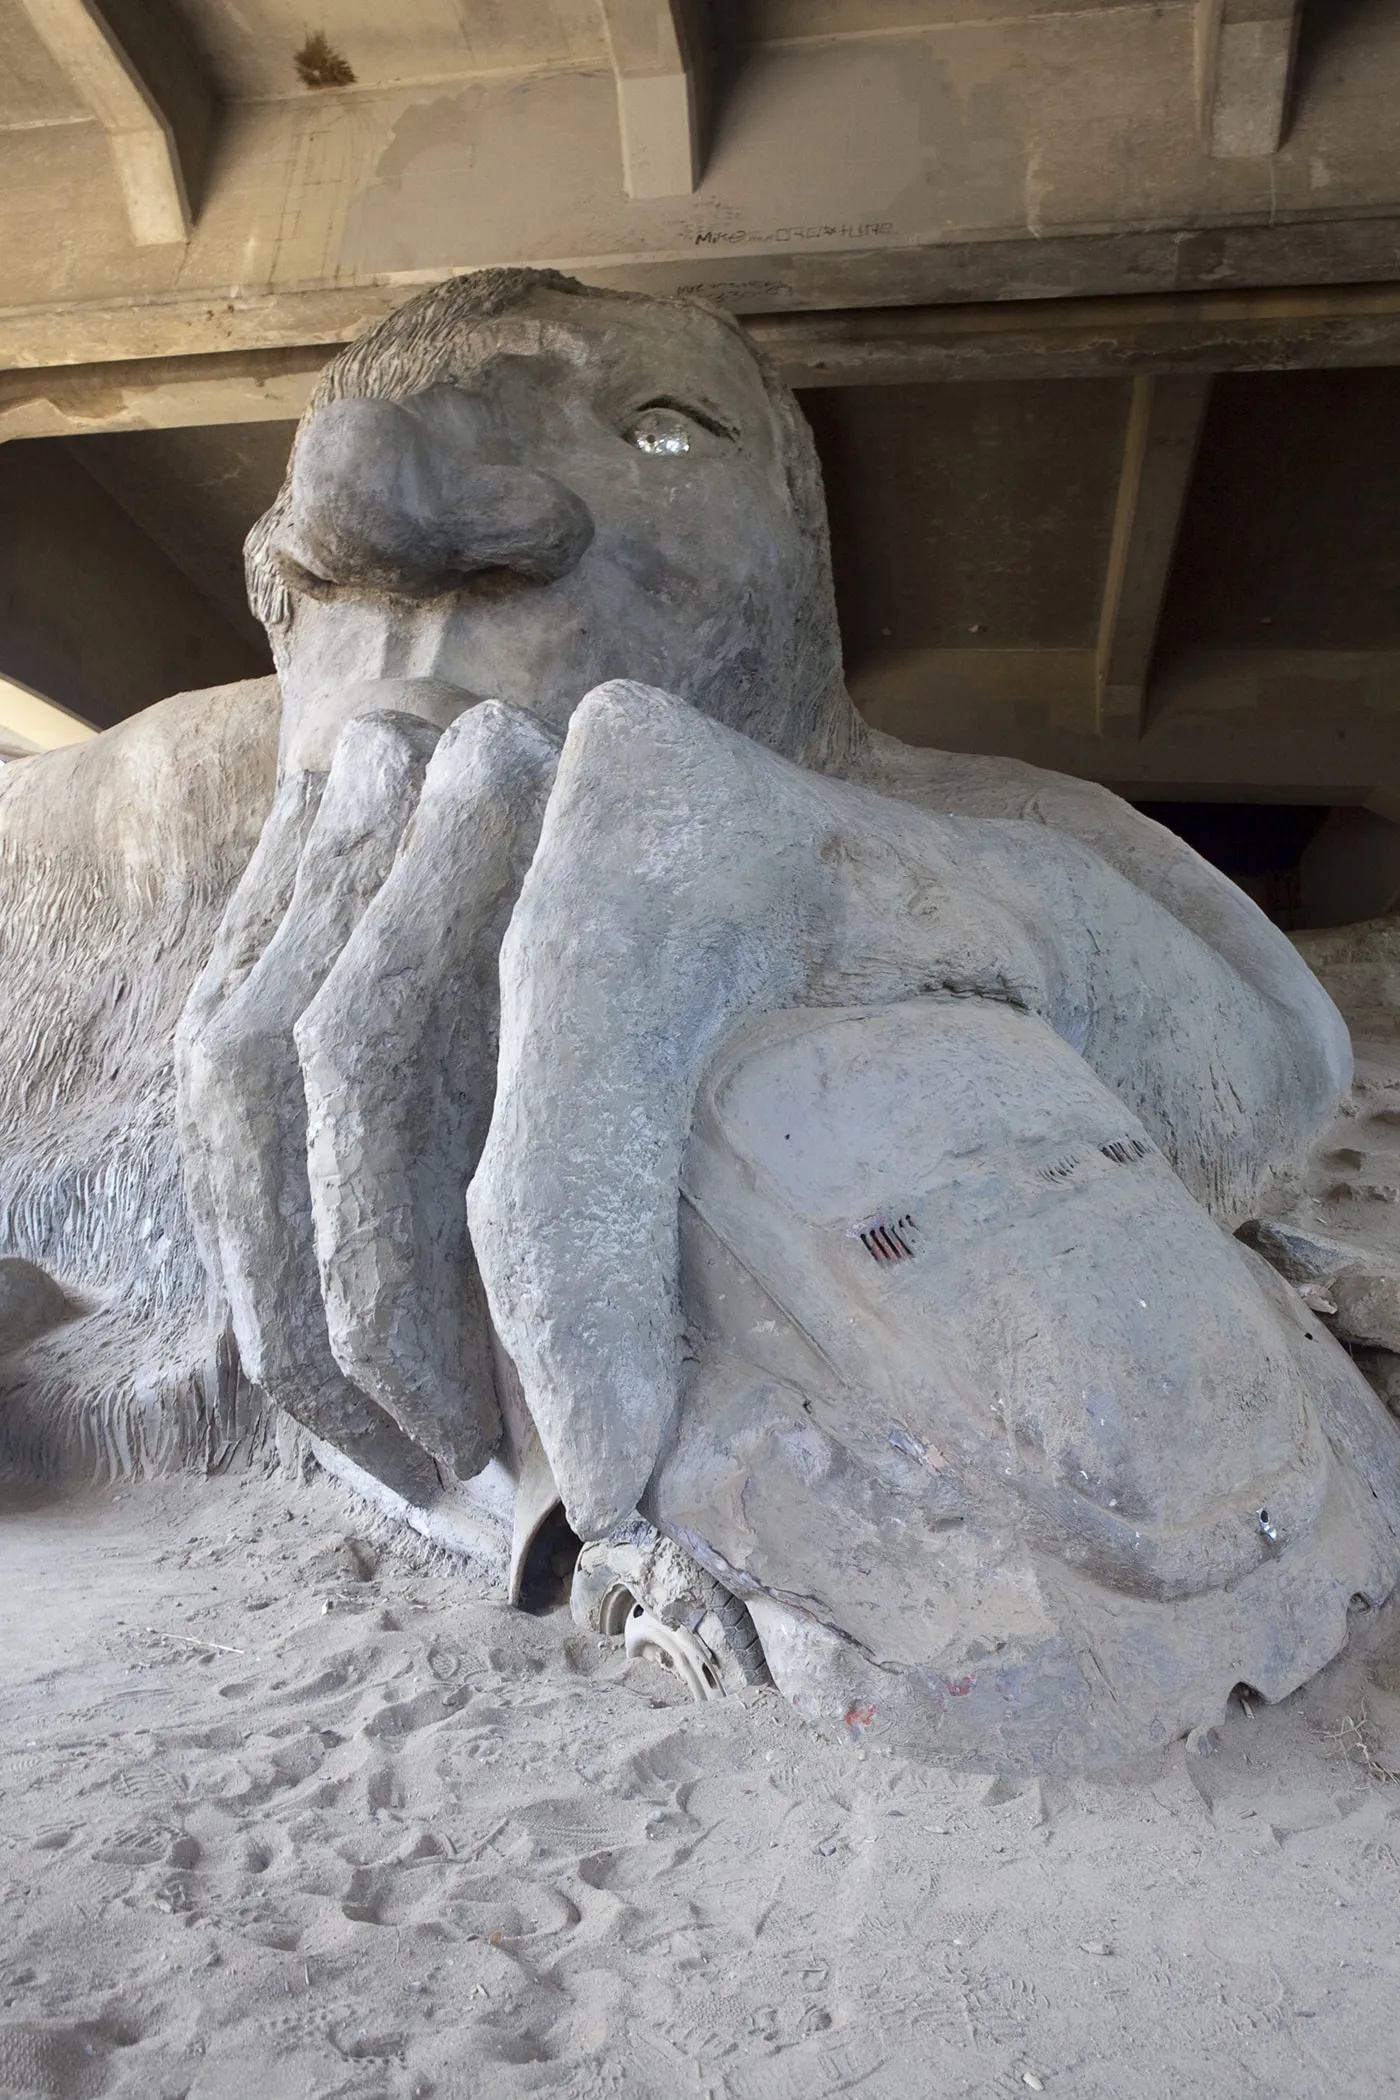 The Fremont Troll, a roadside attraction in Seattle, Washington.